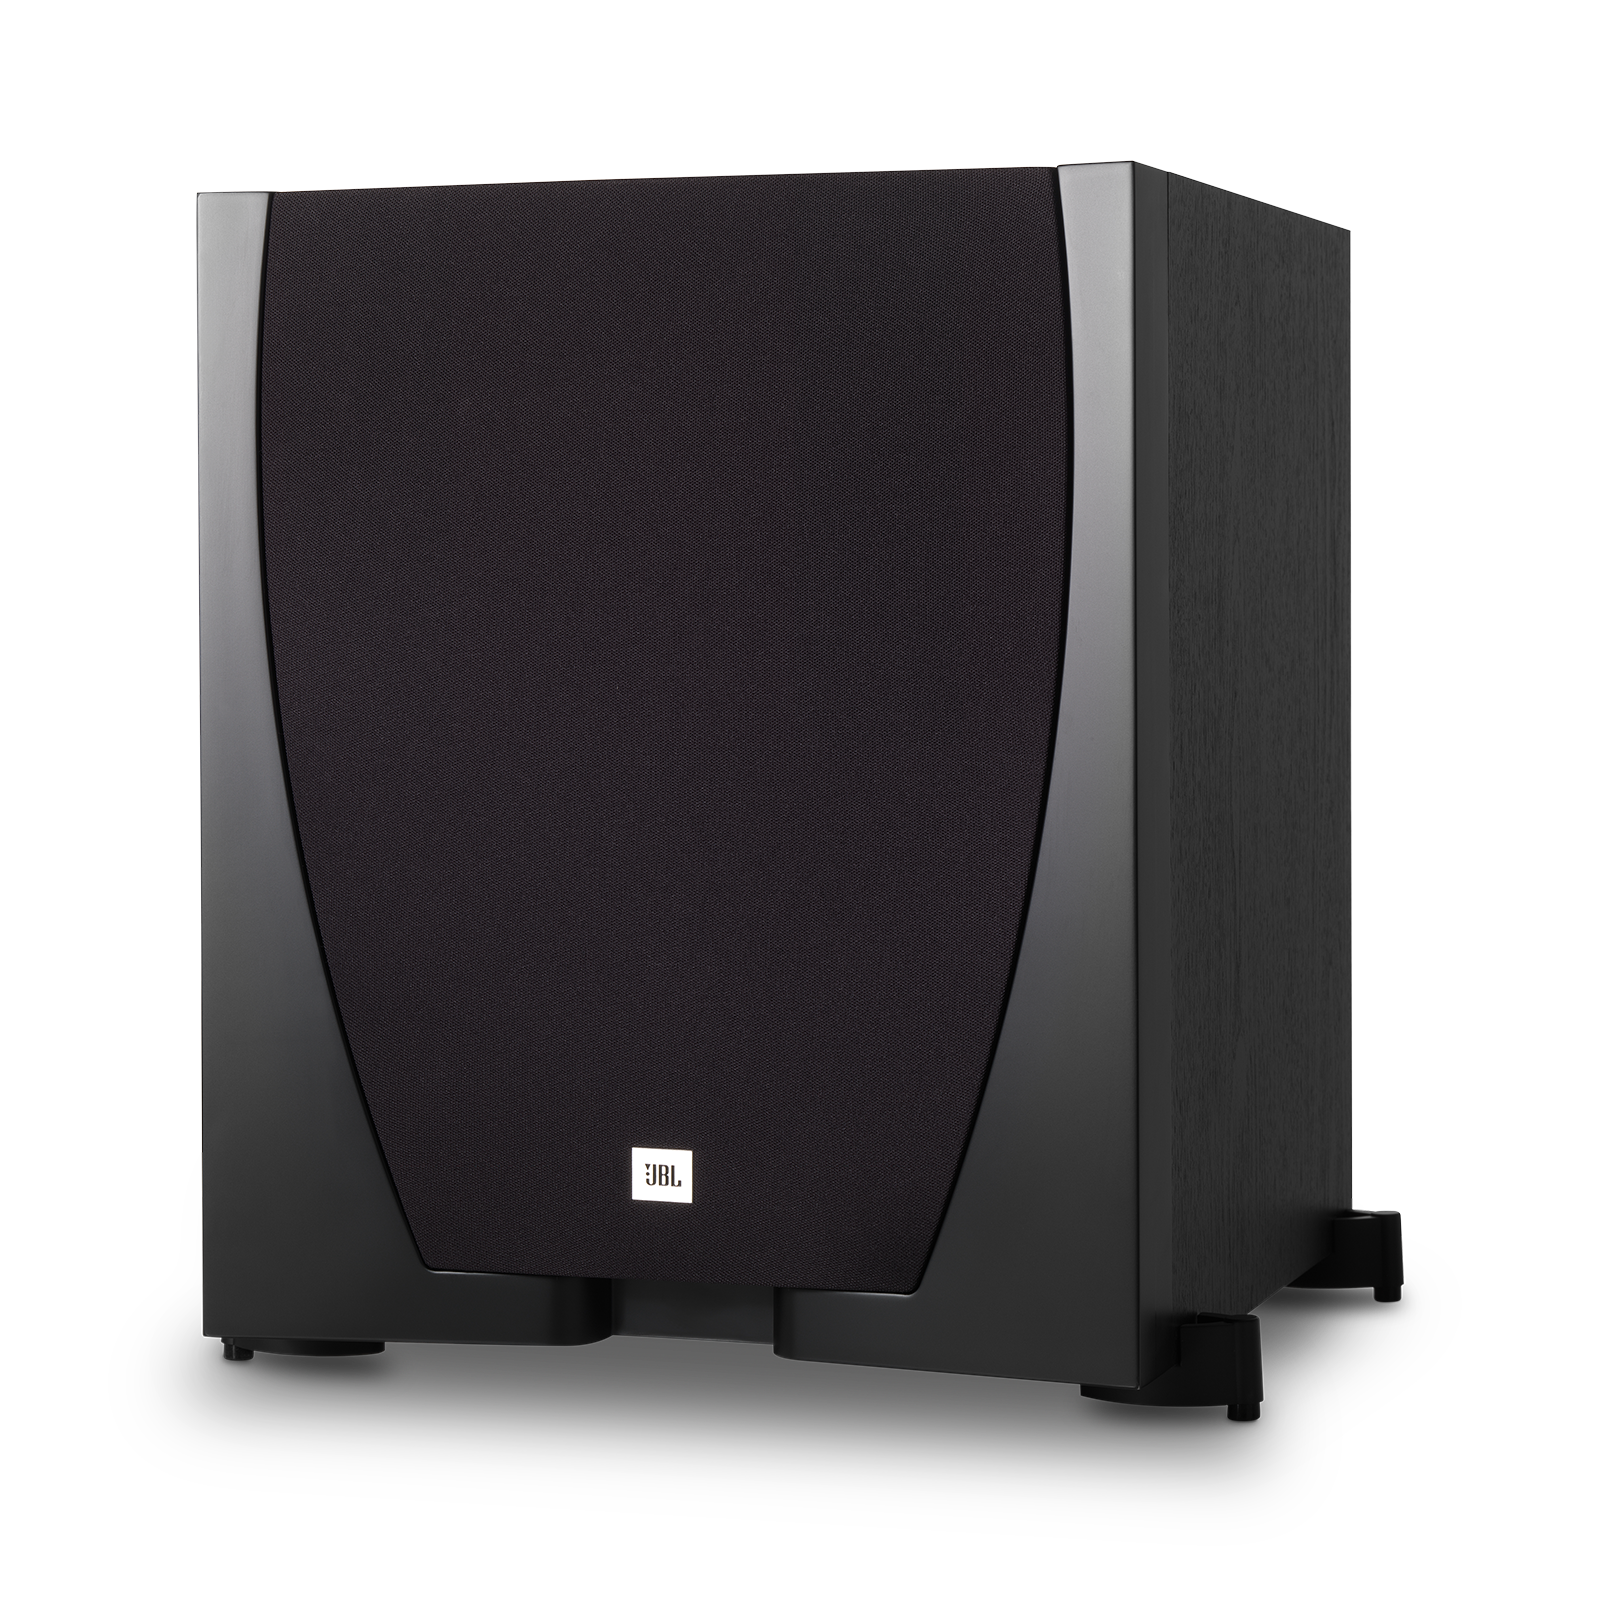 More than half off MSRP makes JBL 500 Series speakers a superb Black Friday deal.